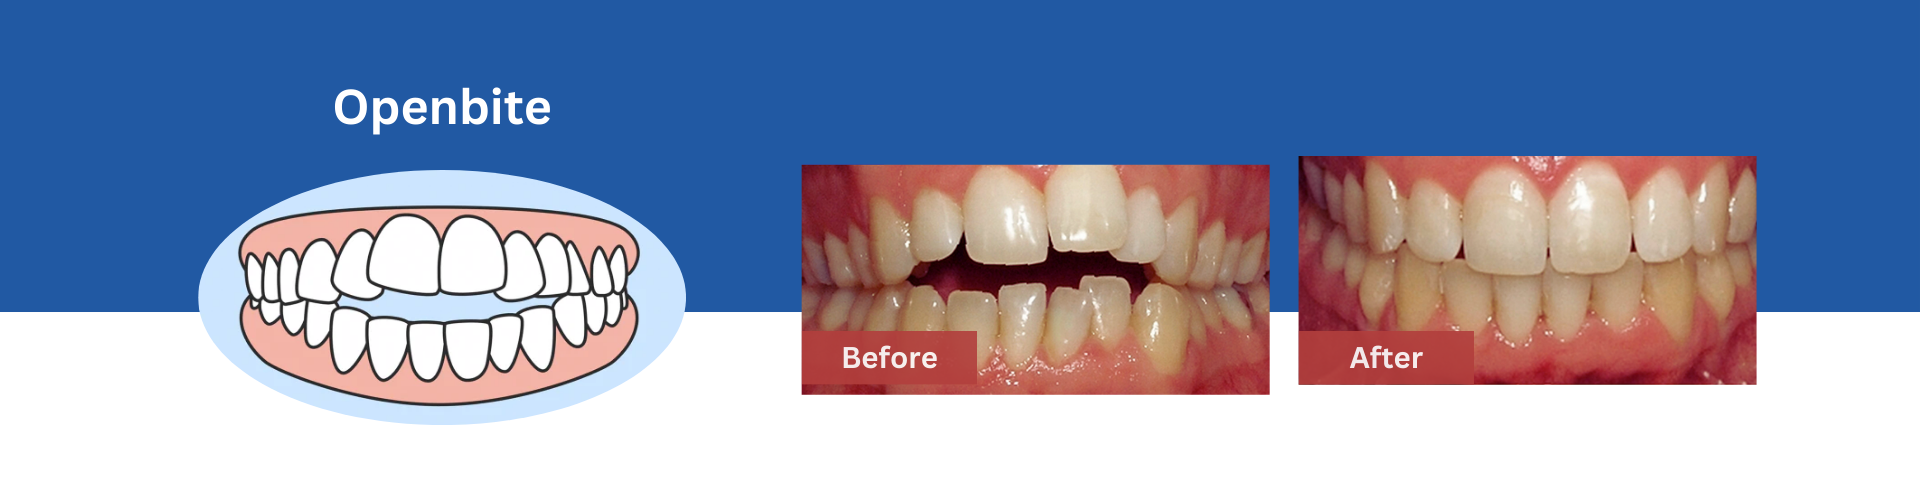 Openbite-Teeth-Treatment-Sunnyvale